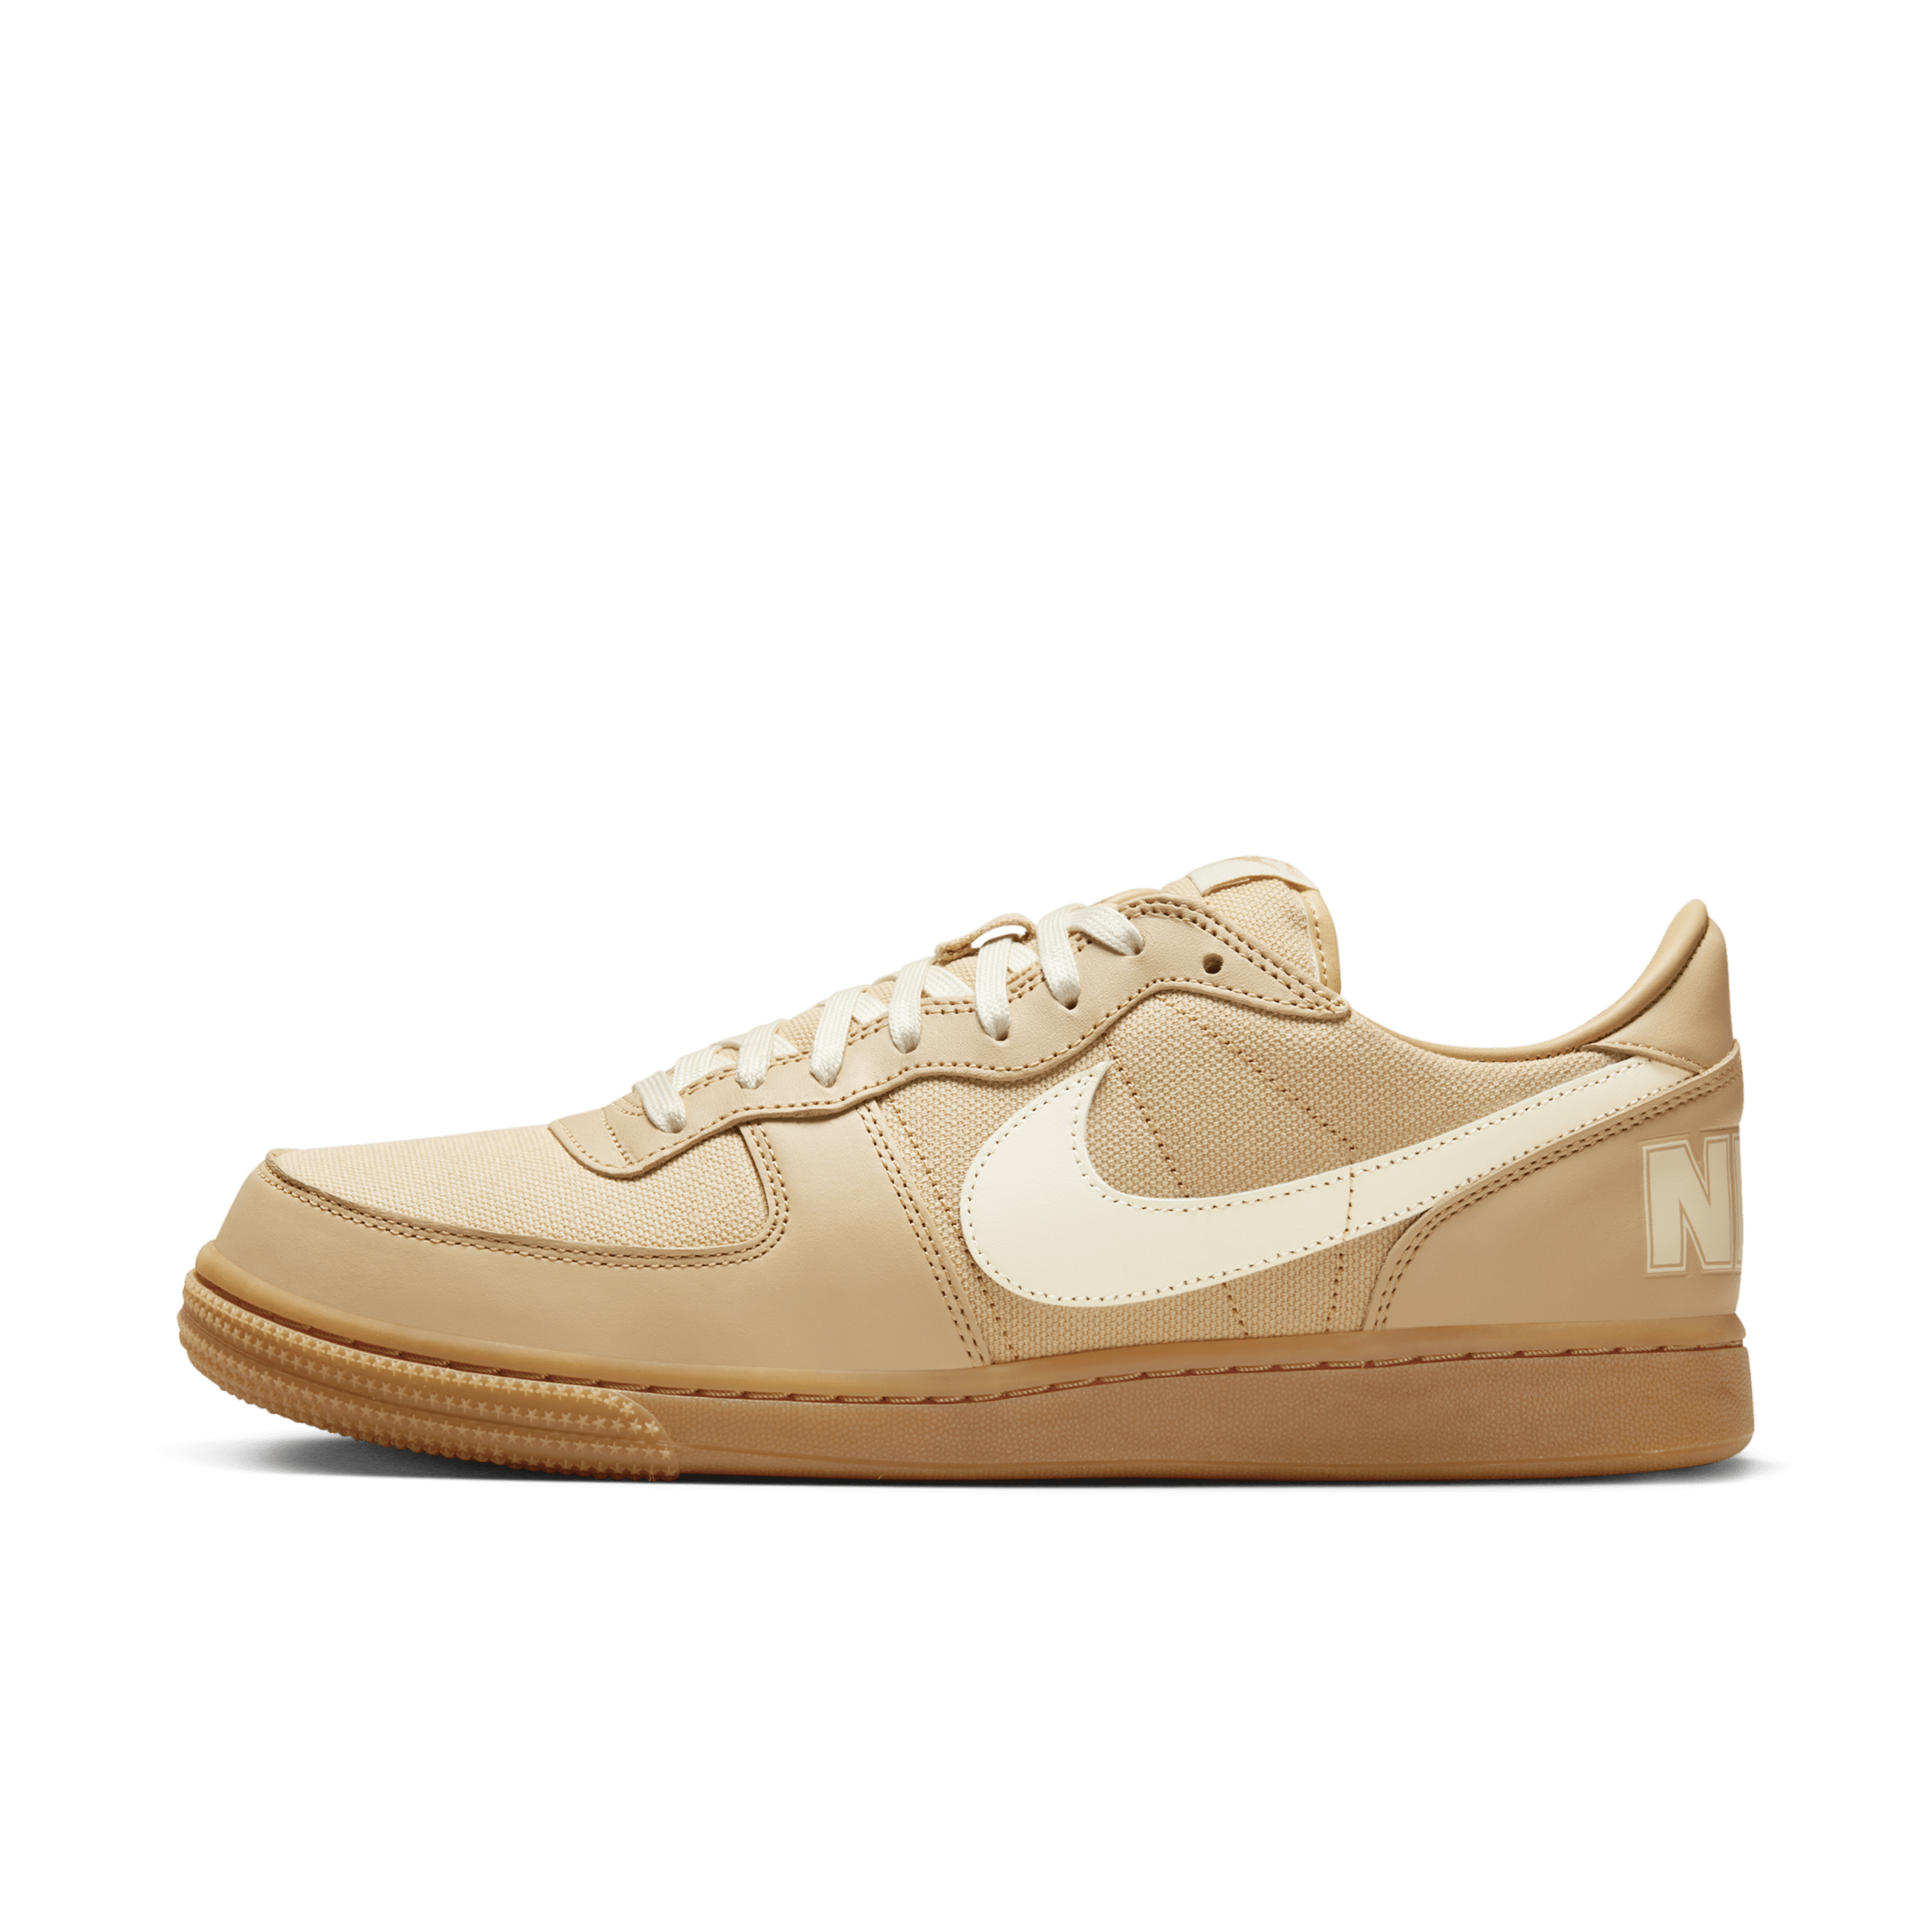 Nike Terminator Low Premium-sko til mænd - brun